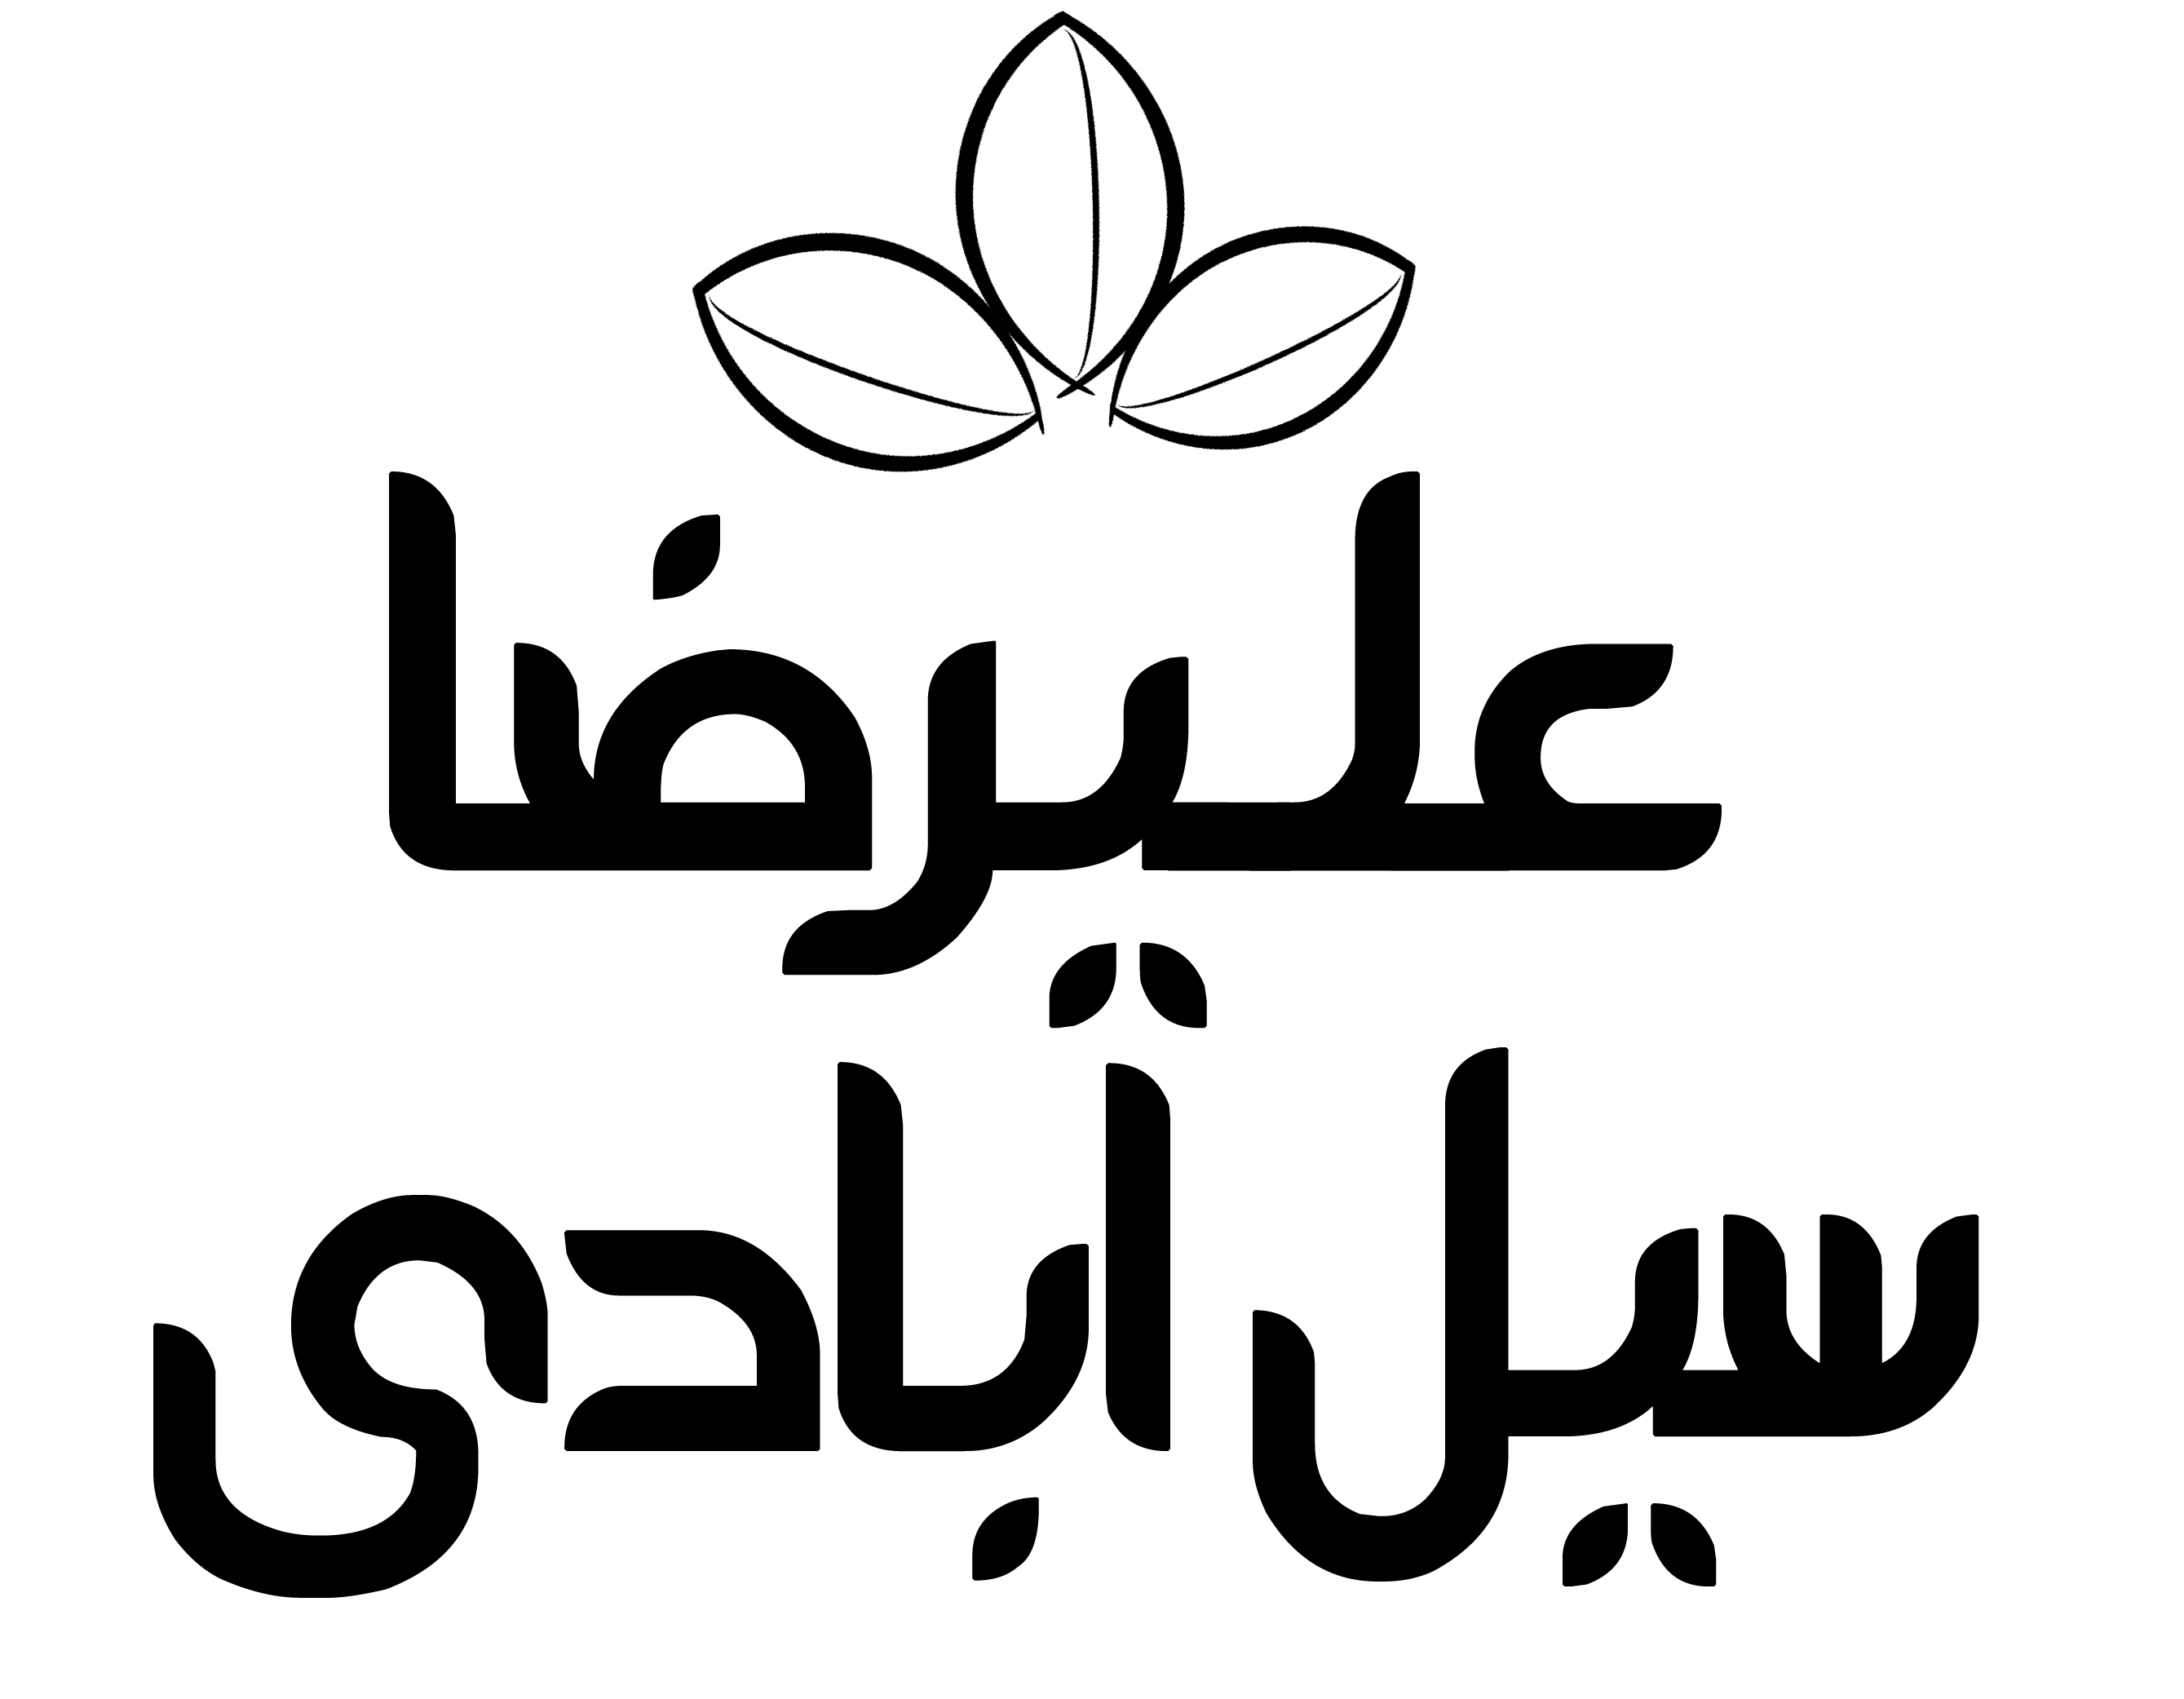 seilabadi-logo-type-99999